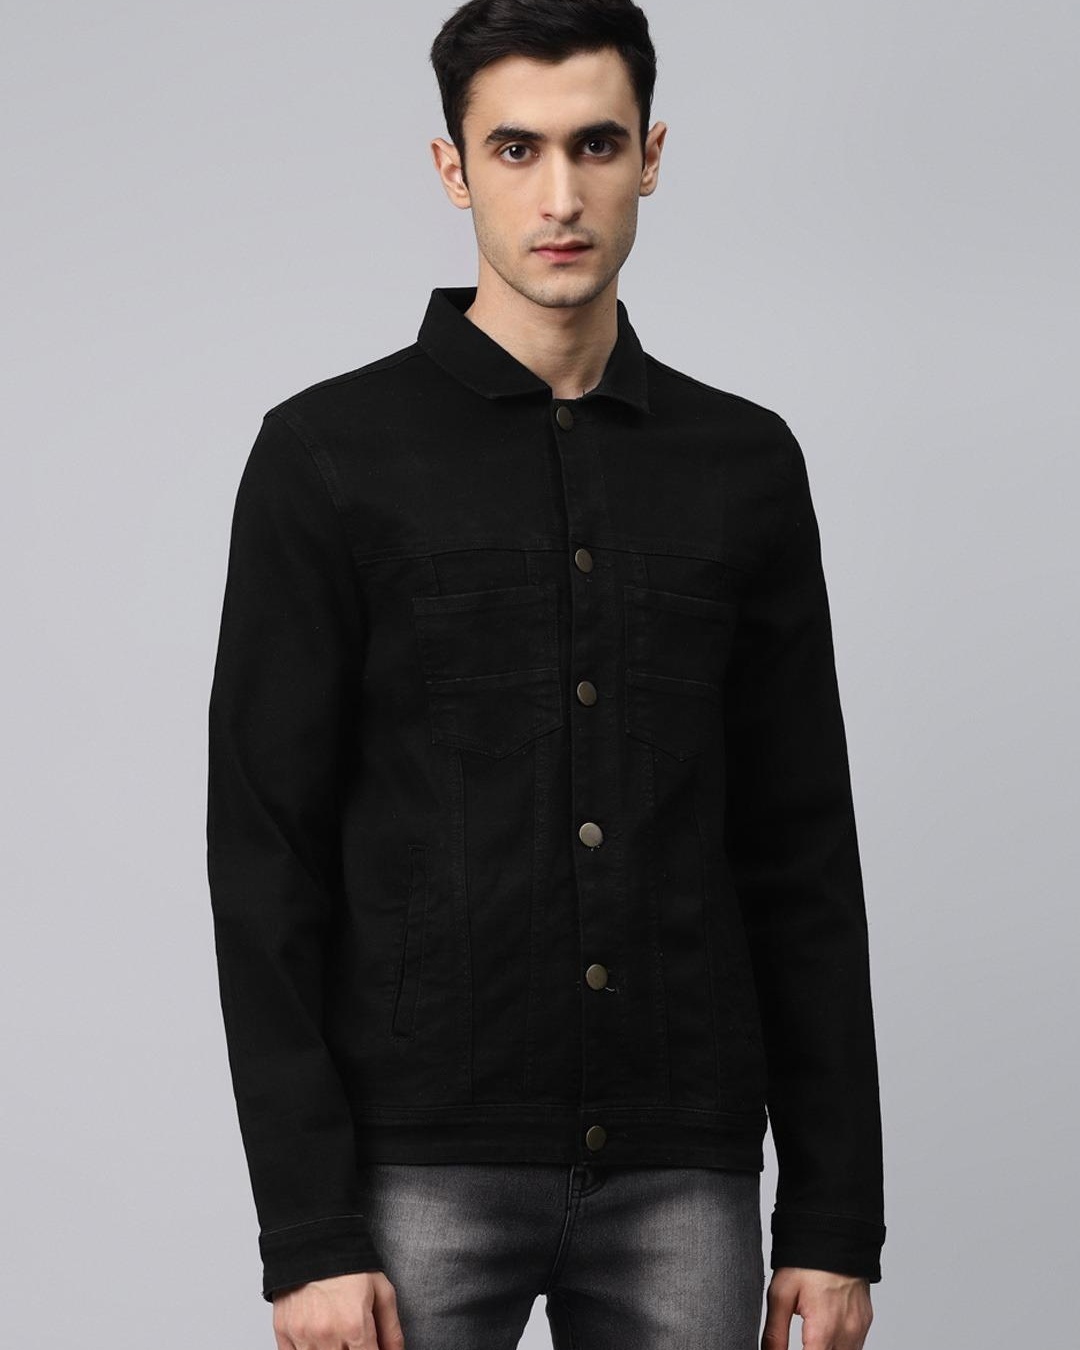 Buy Men's Solid Stylish Casual Denim Jacket Online at Bewakoof